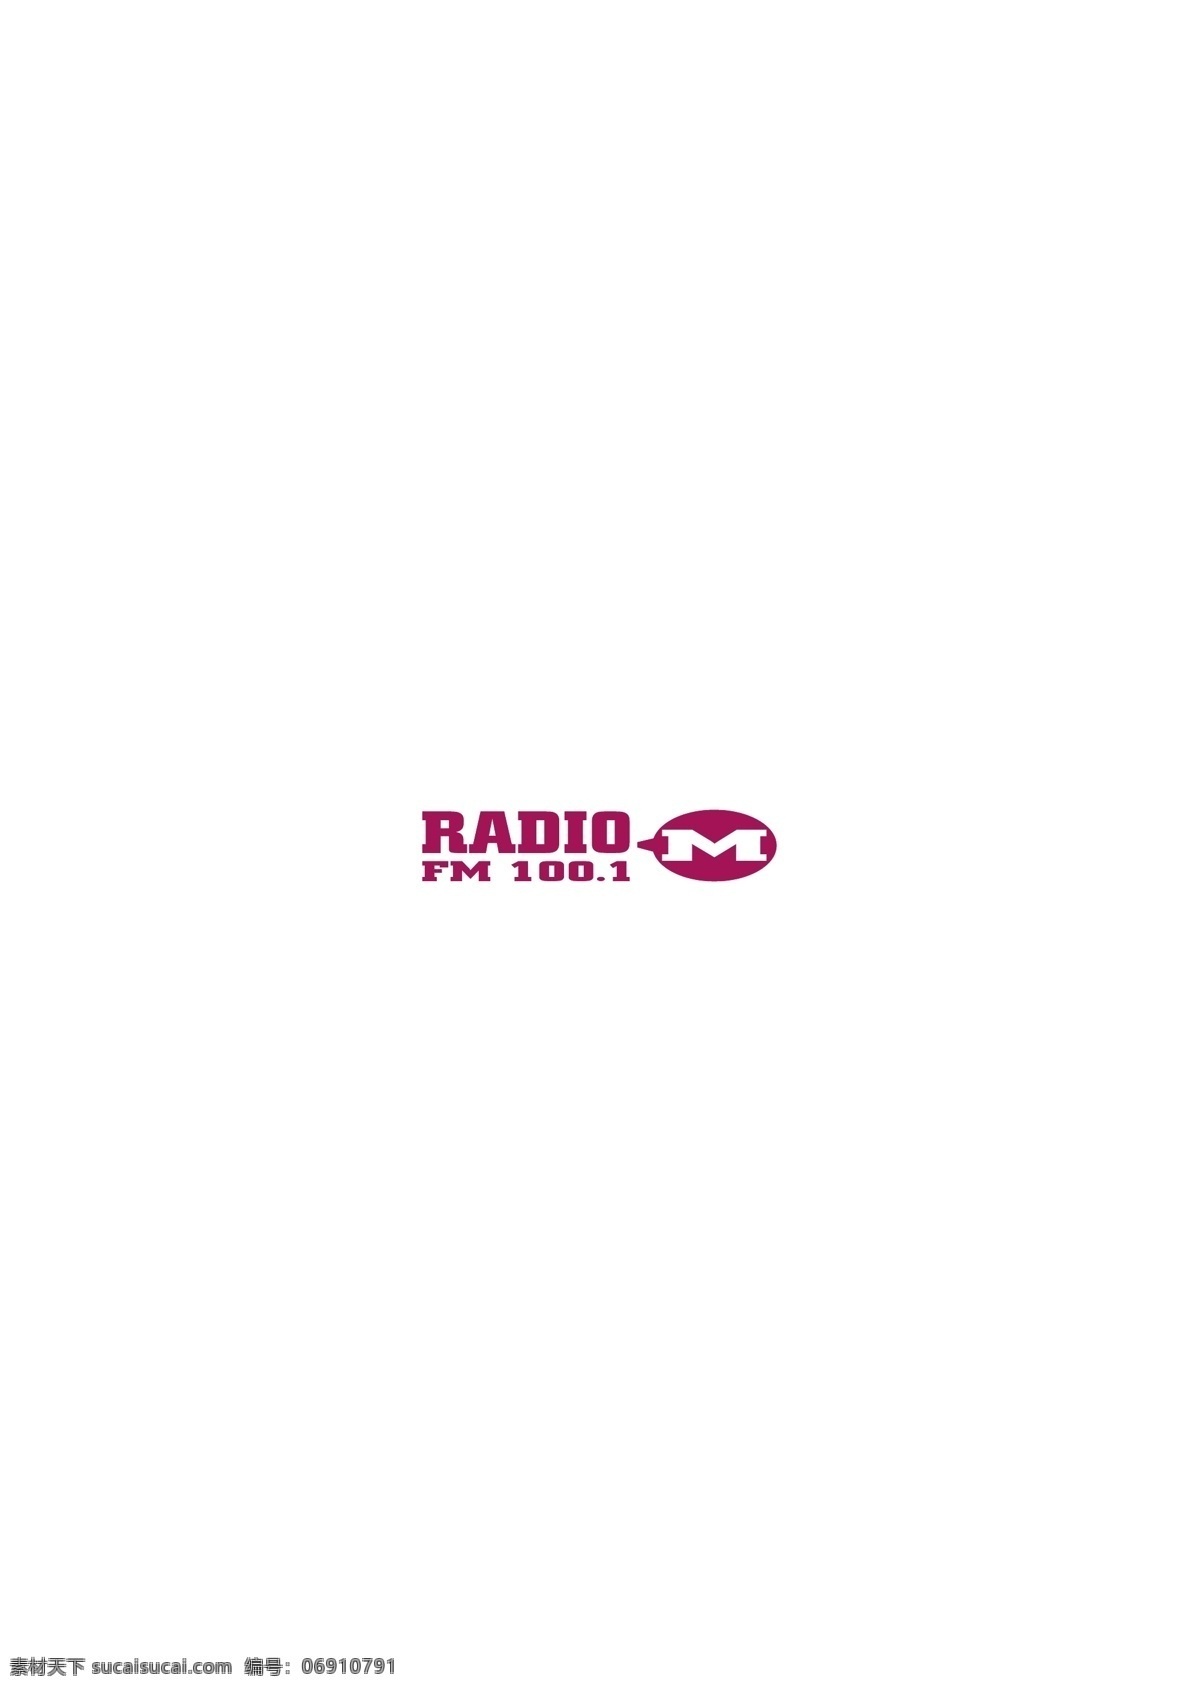 radio logo大全 logo 设计欣赏 商业矢量 矢量下载 m1 标志设计 欣赏 网页矢量 矢量图 其他矢量图